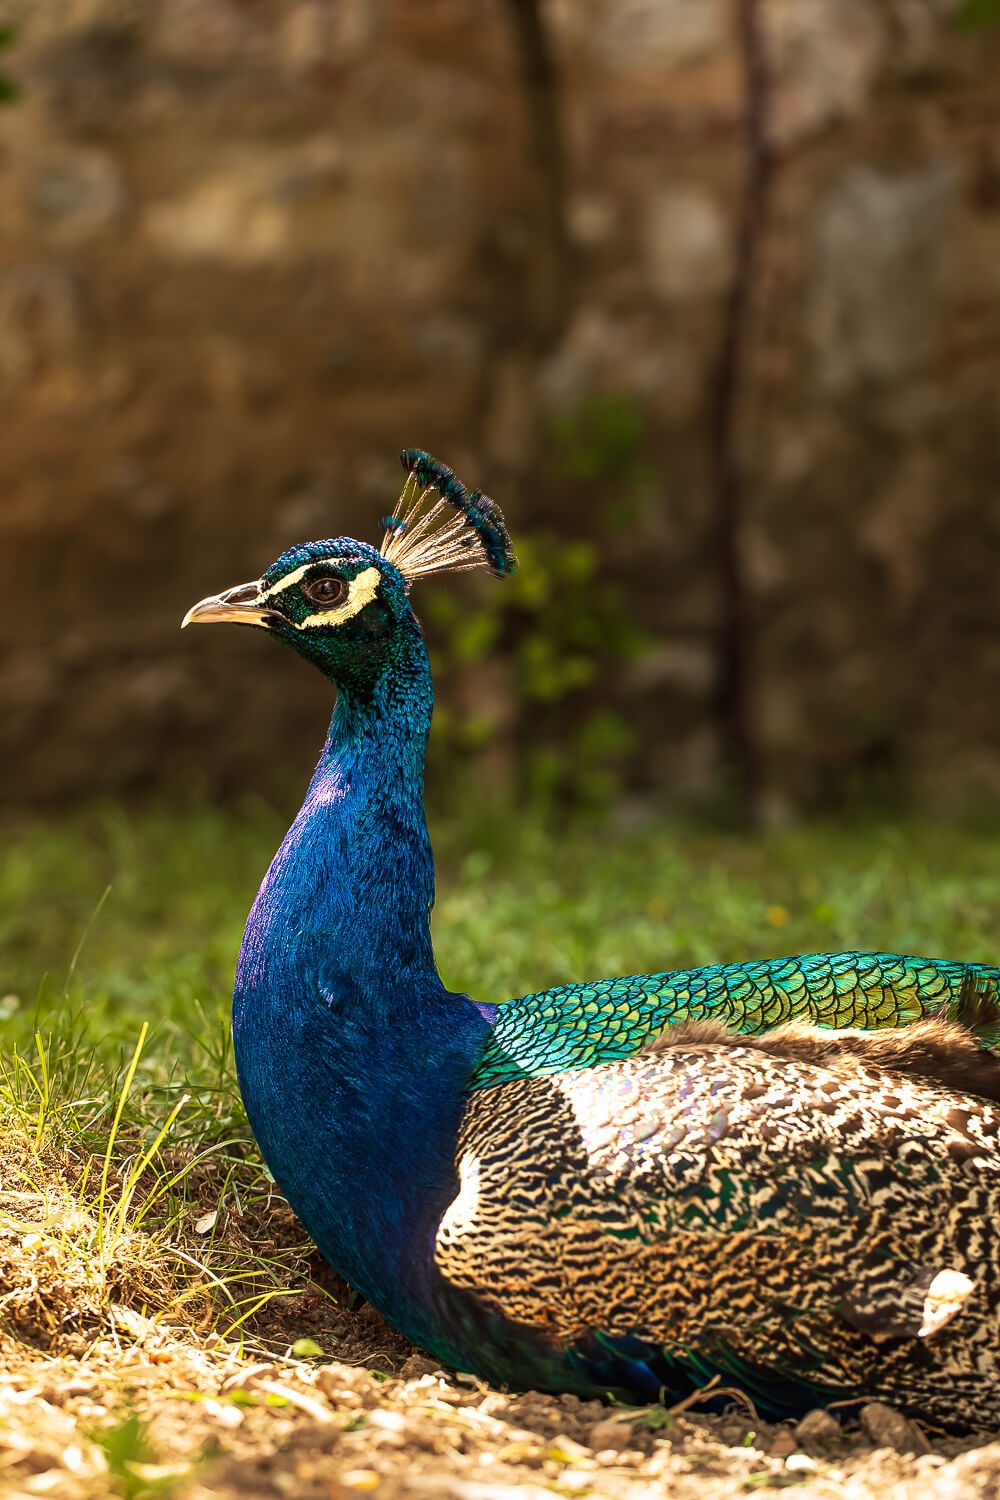 A peacock at St. Naum Monastery